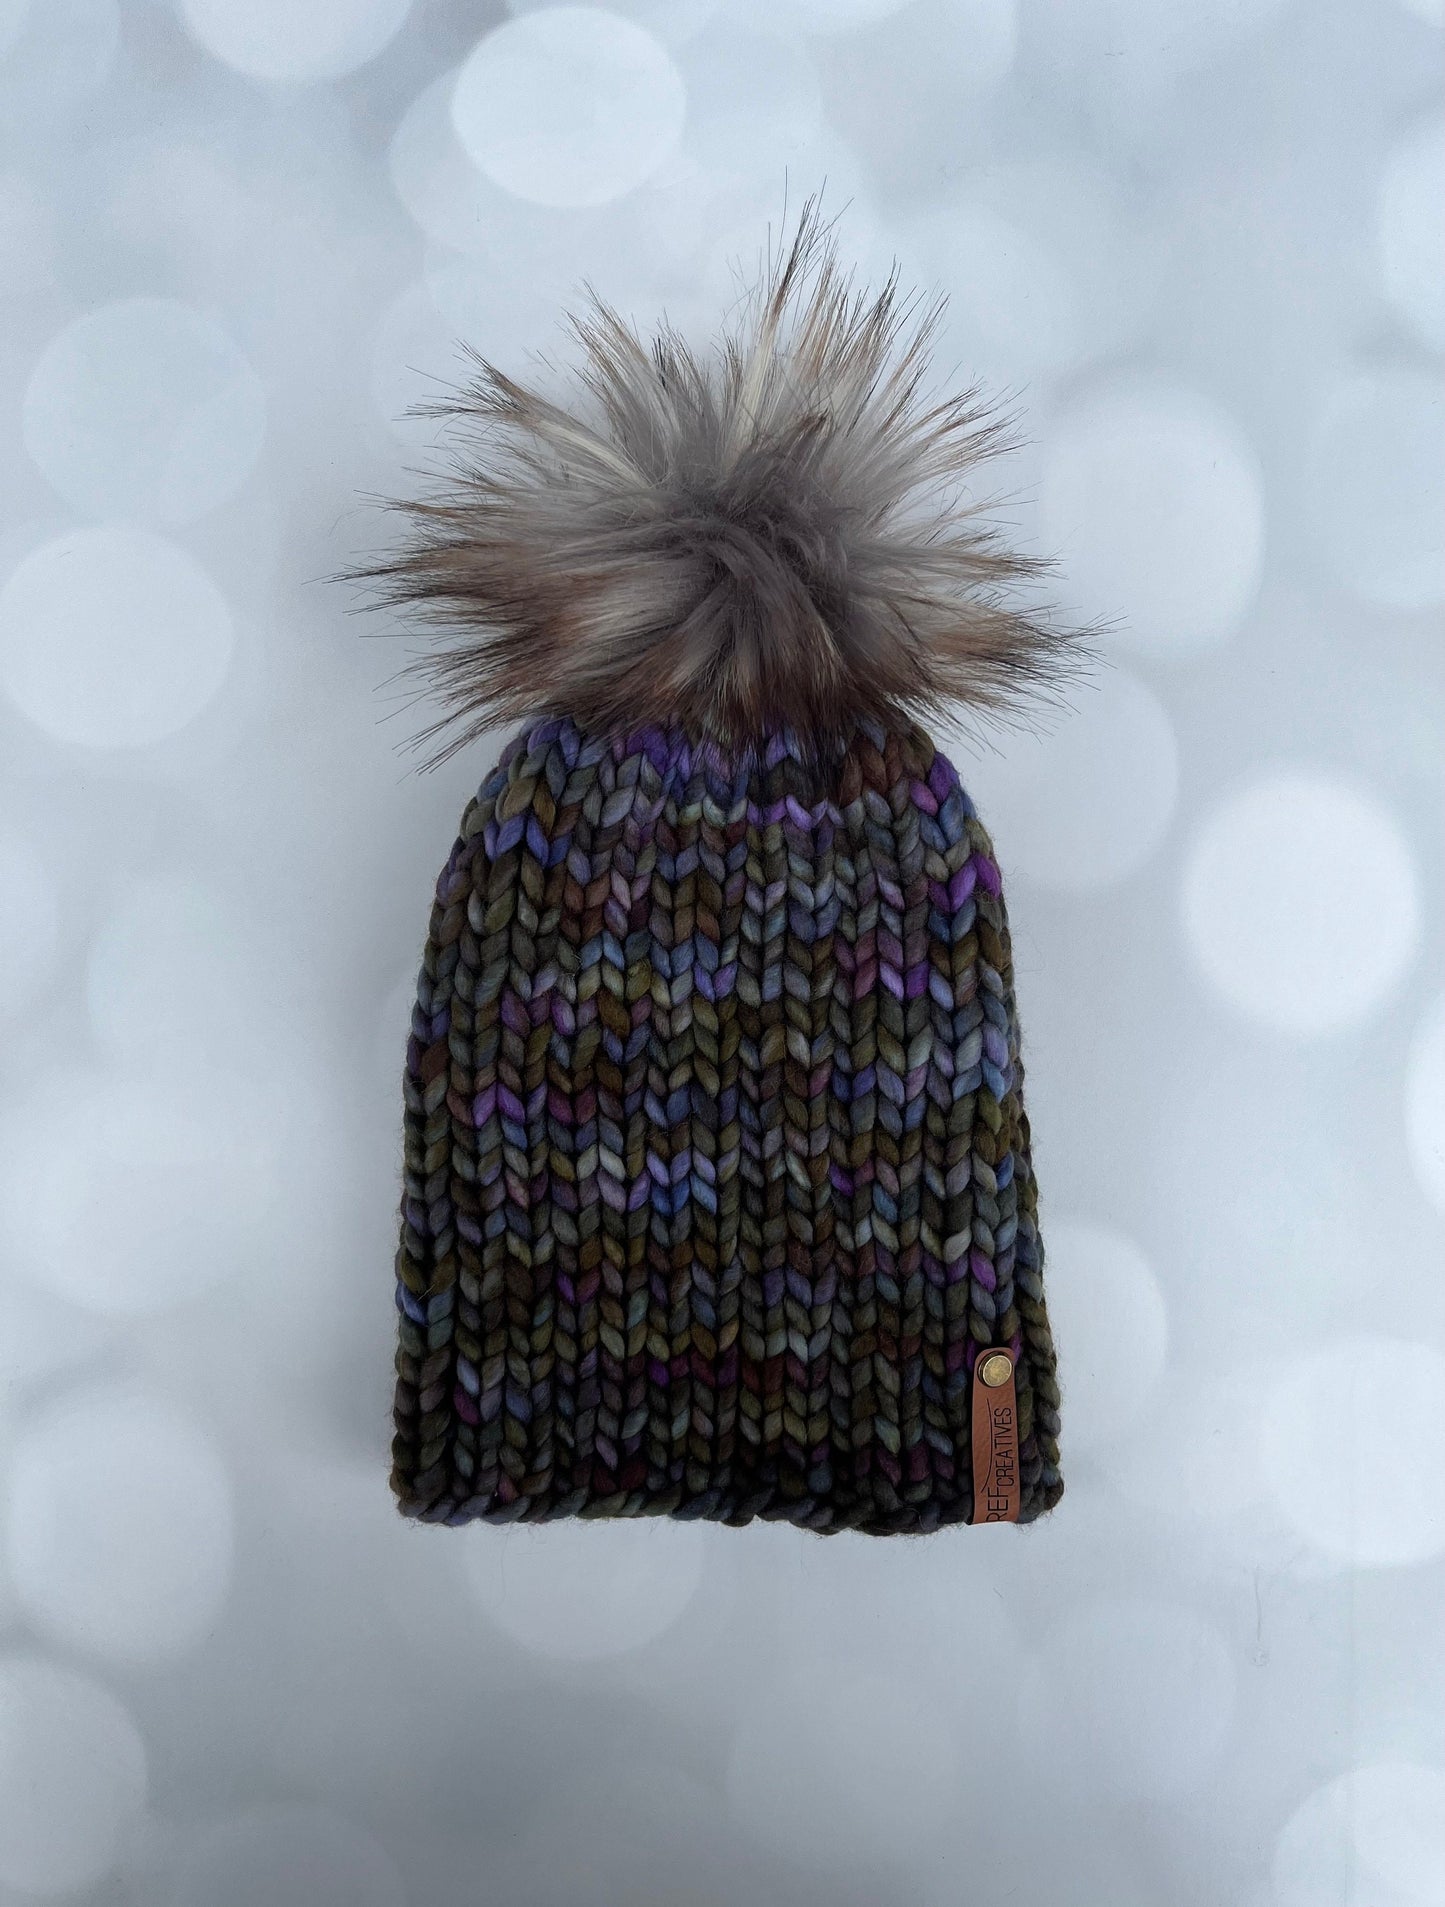 Luxury Merino Wool Classic Knit Hat - Blackberry Bush Classic Beanie Hand Knit Hat with Hand Dyed Yarn